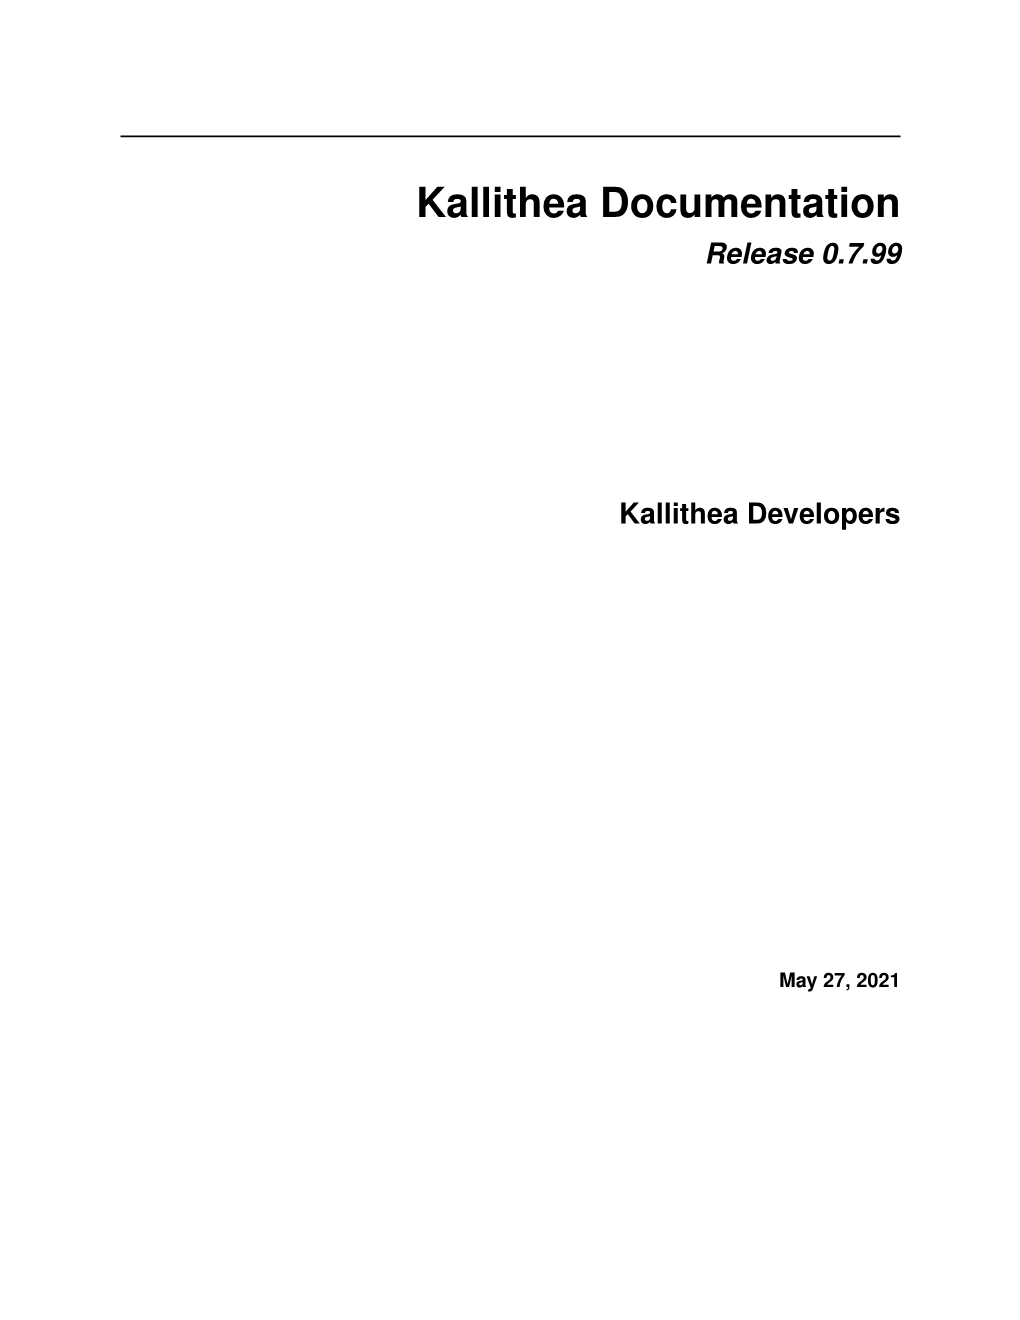 Kallithea Documentation Release 0.7.99